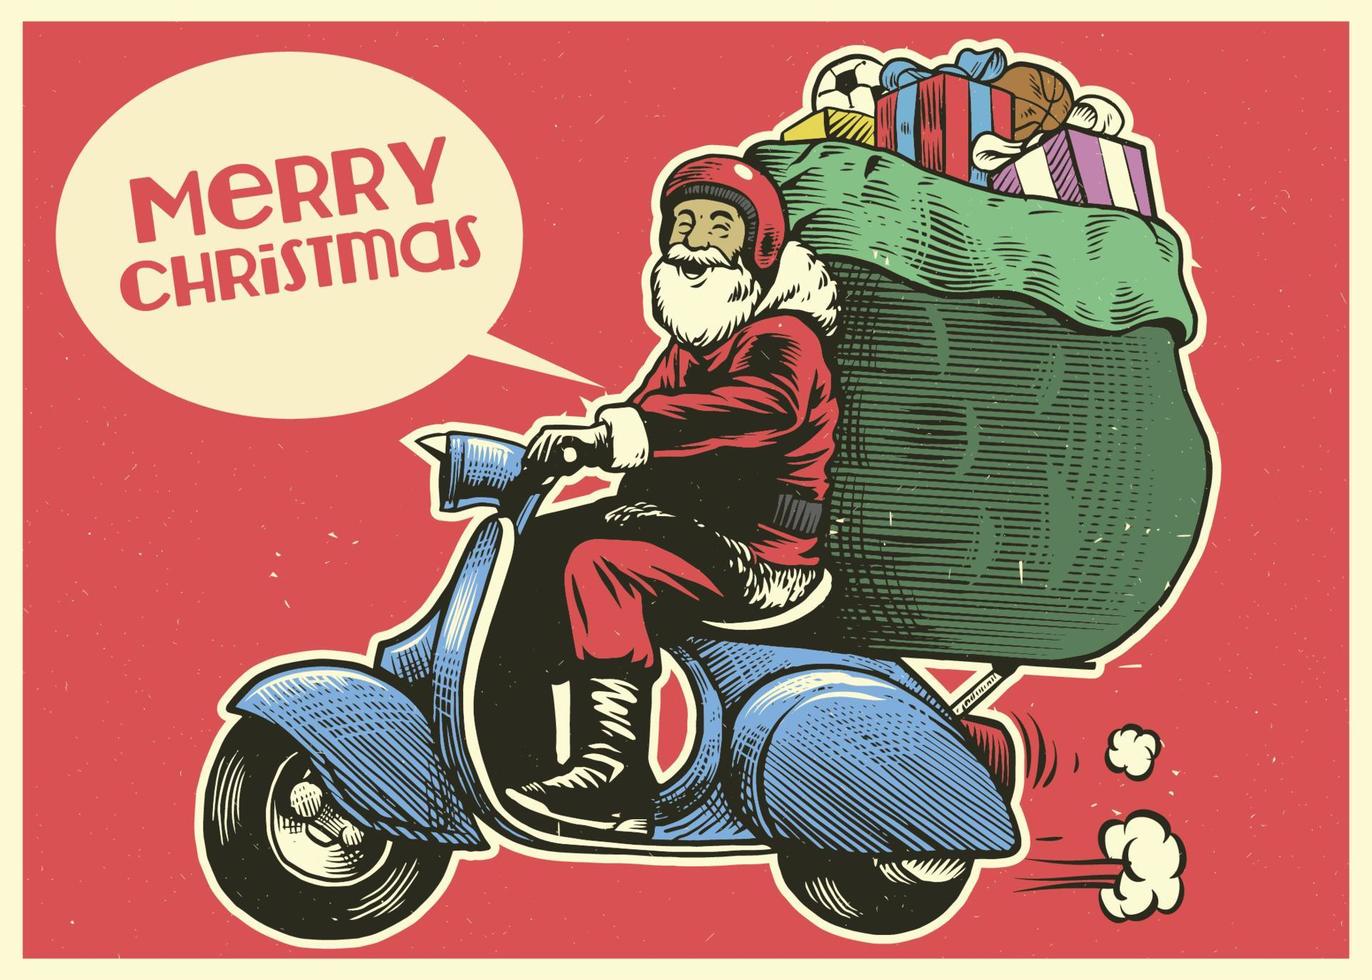 mano dibujo estilo de Papa Noel claus paseo un scooter motocicleta vector